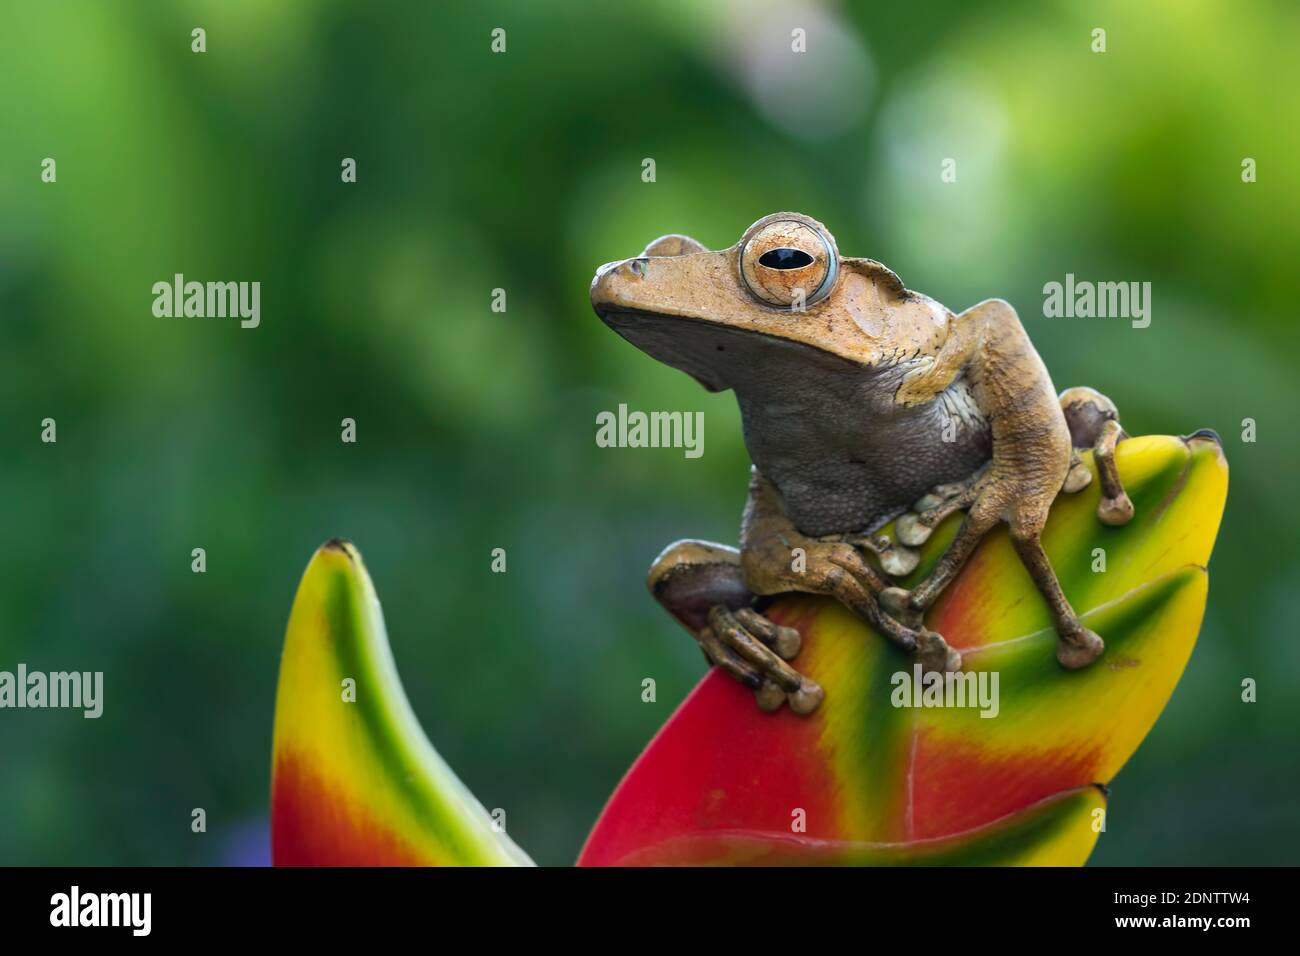 Polypedates otilophus frog sitting on a flower bud, Indonesia Stock Photo